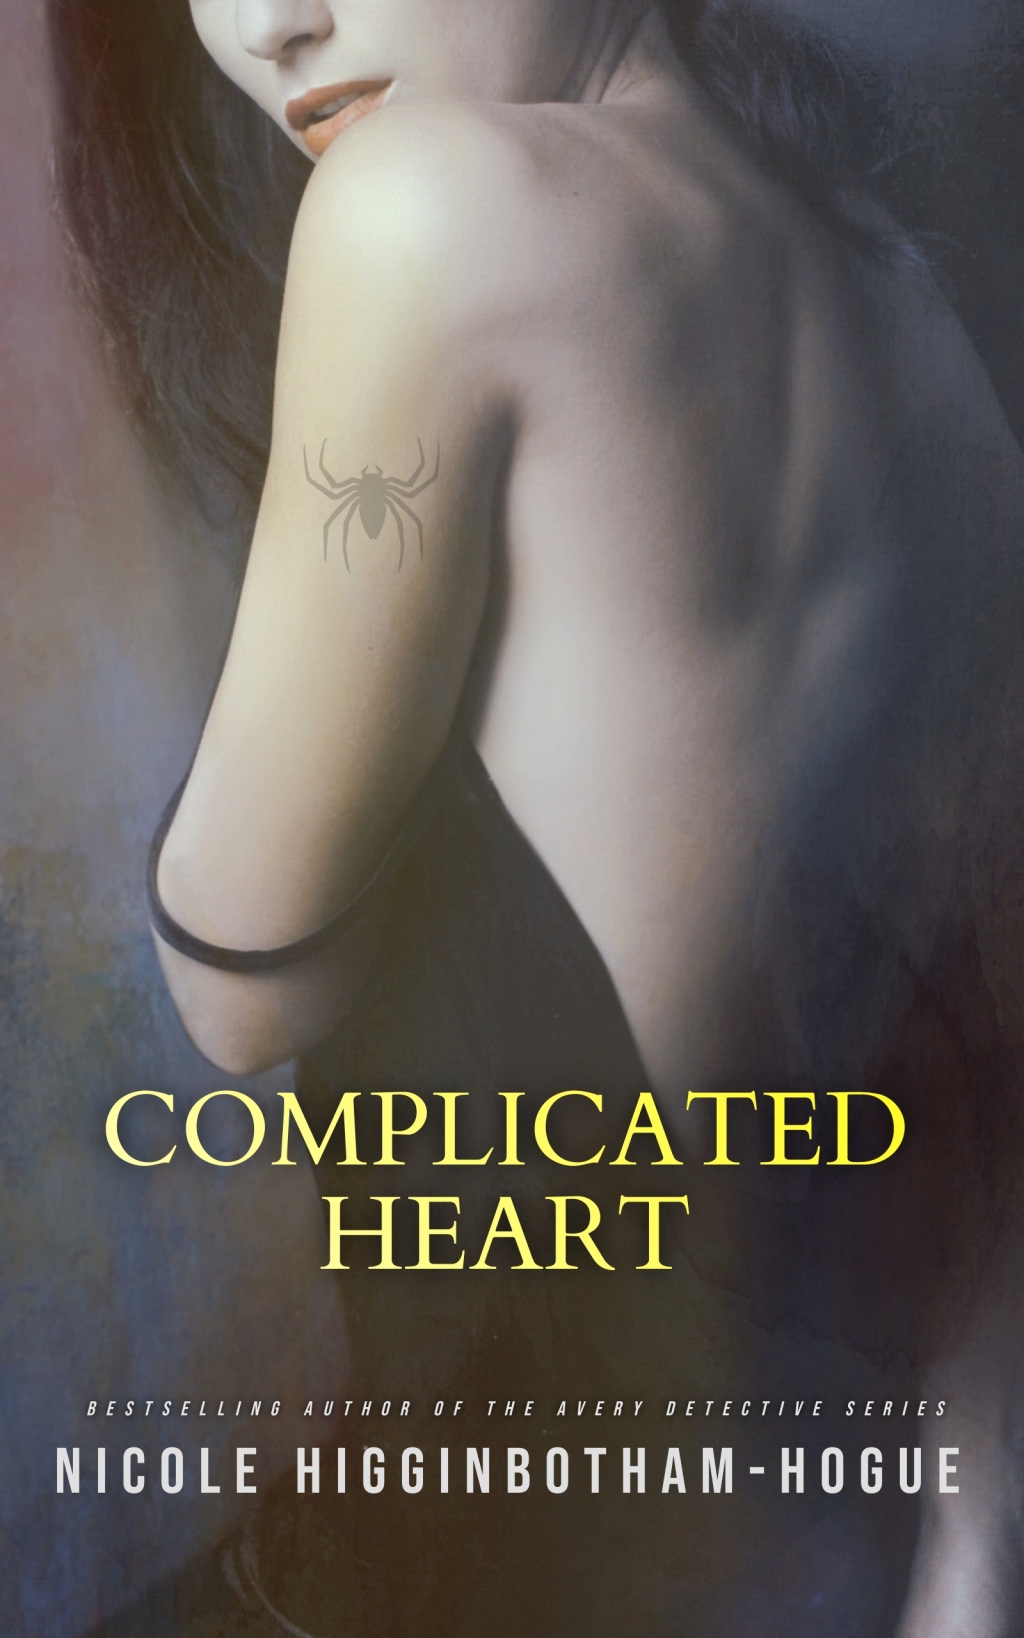 Nicole Higginbotham-Hogue, author of Complicated Heart